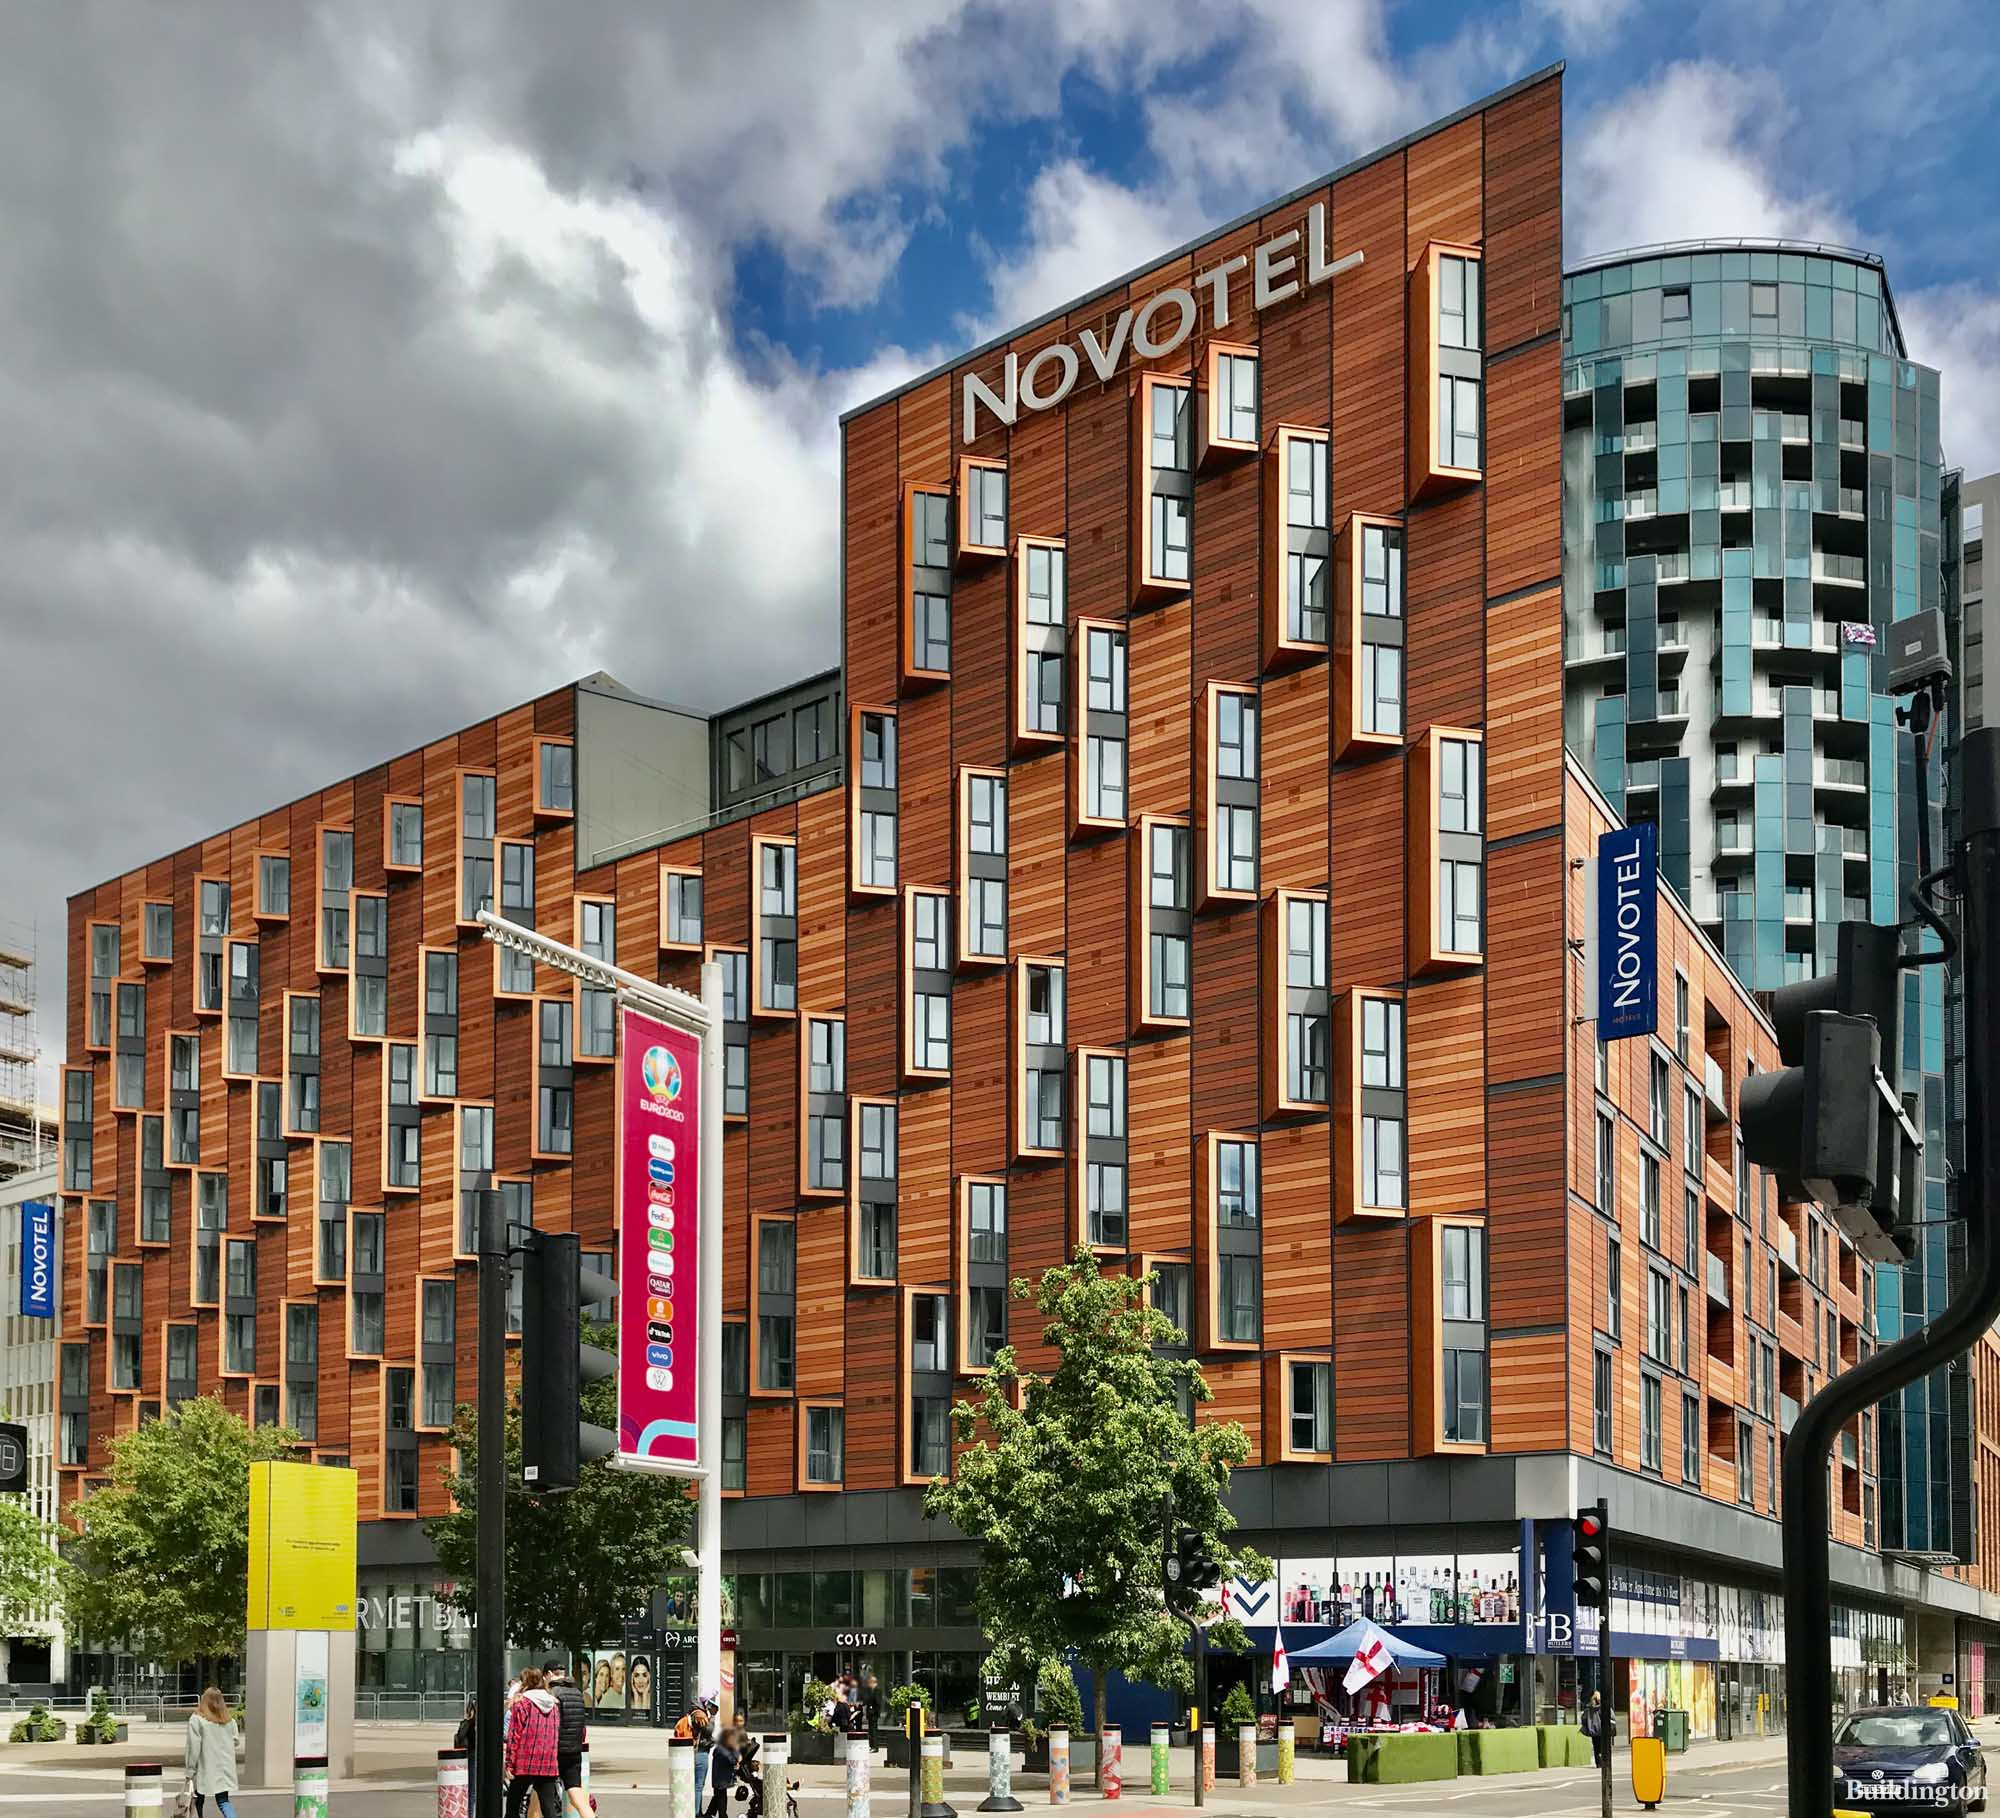 Hotel Novotel London Wembley building on Olympic Way.